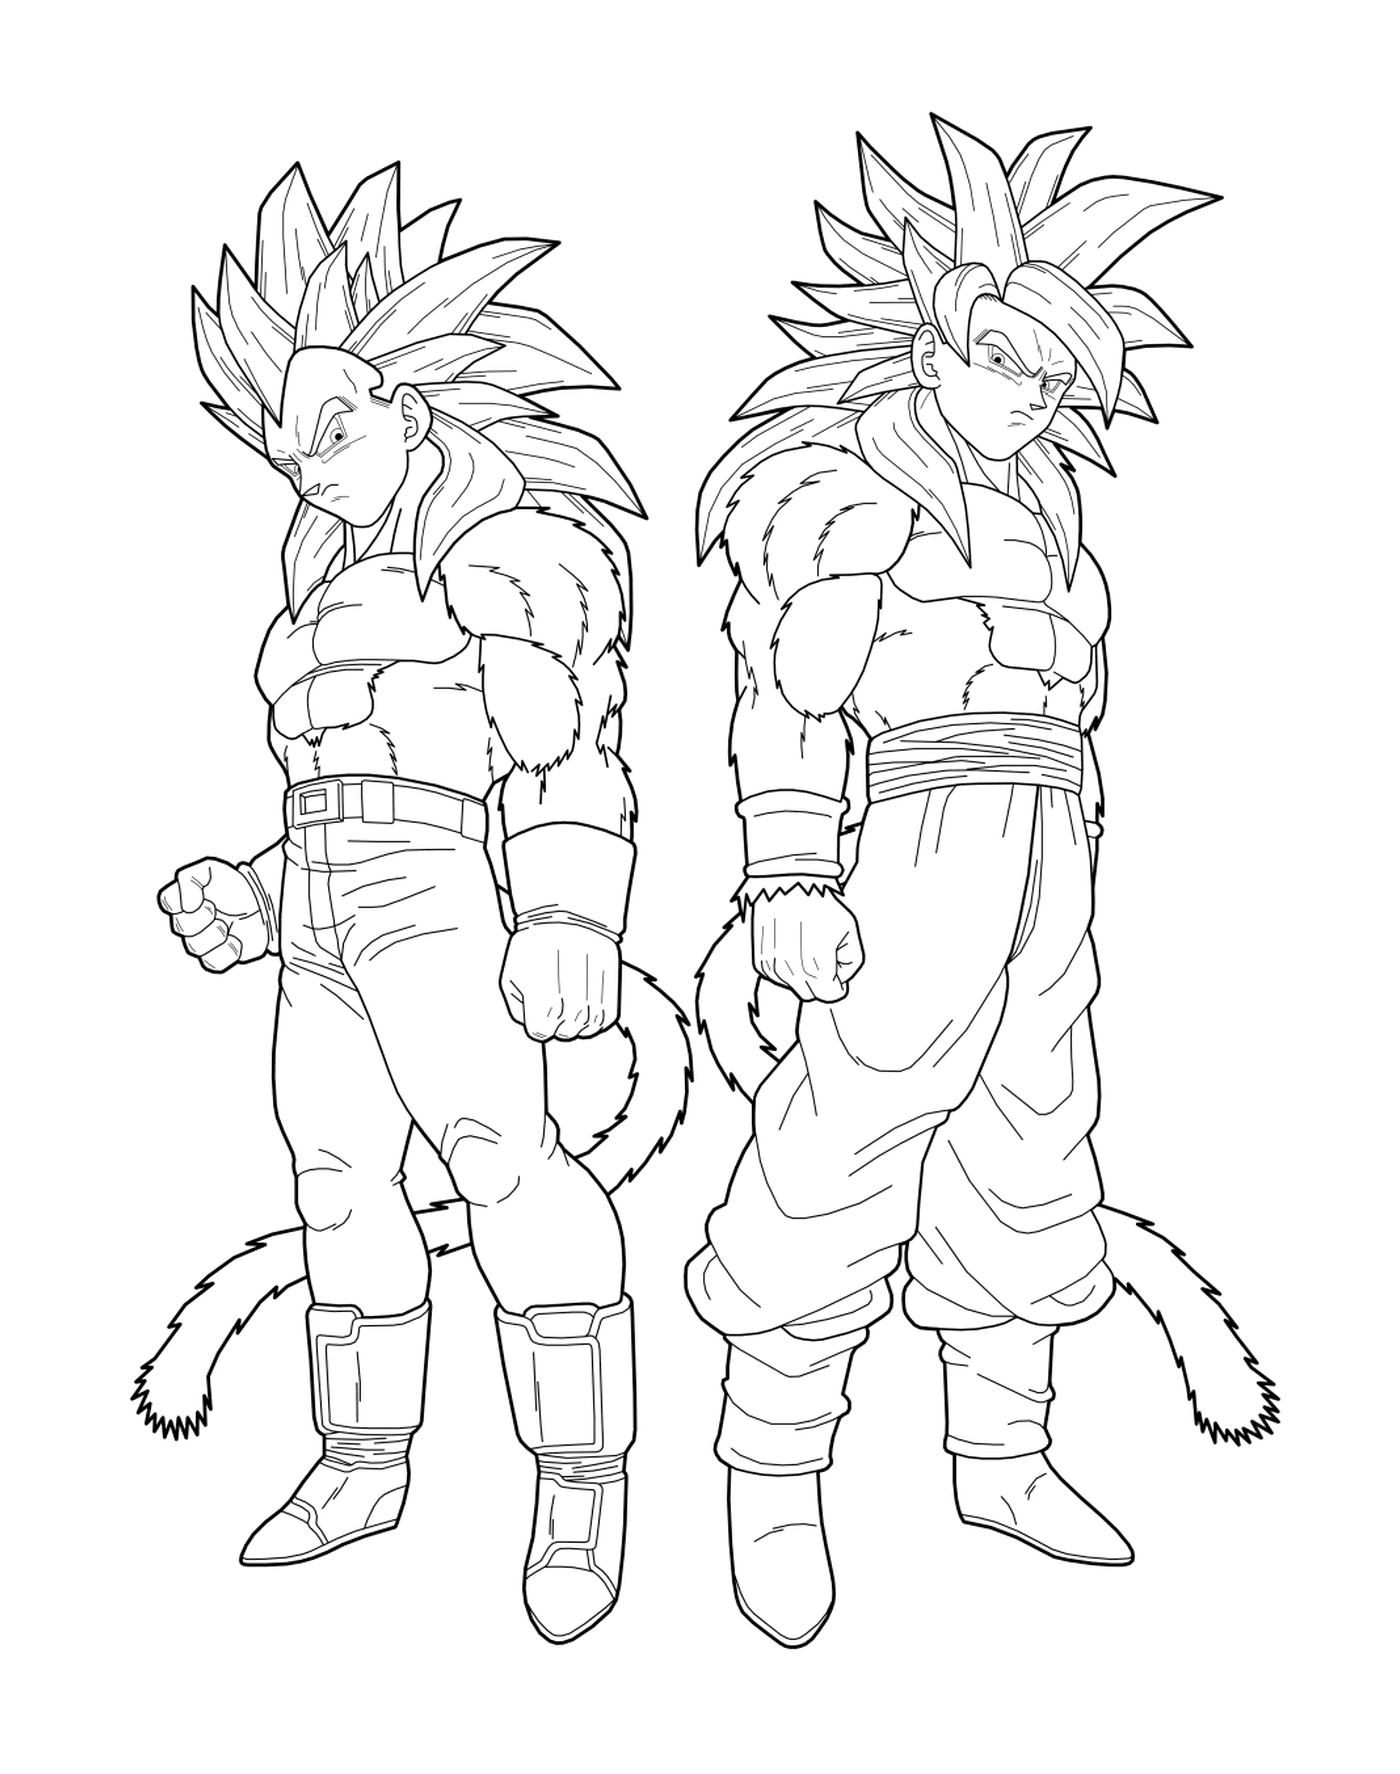  Goku e Vegeta unidos 